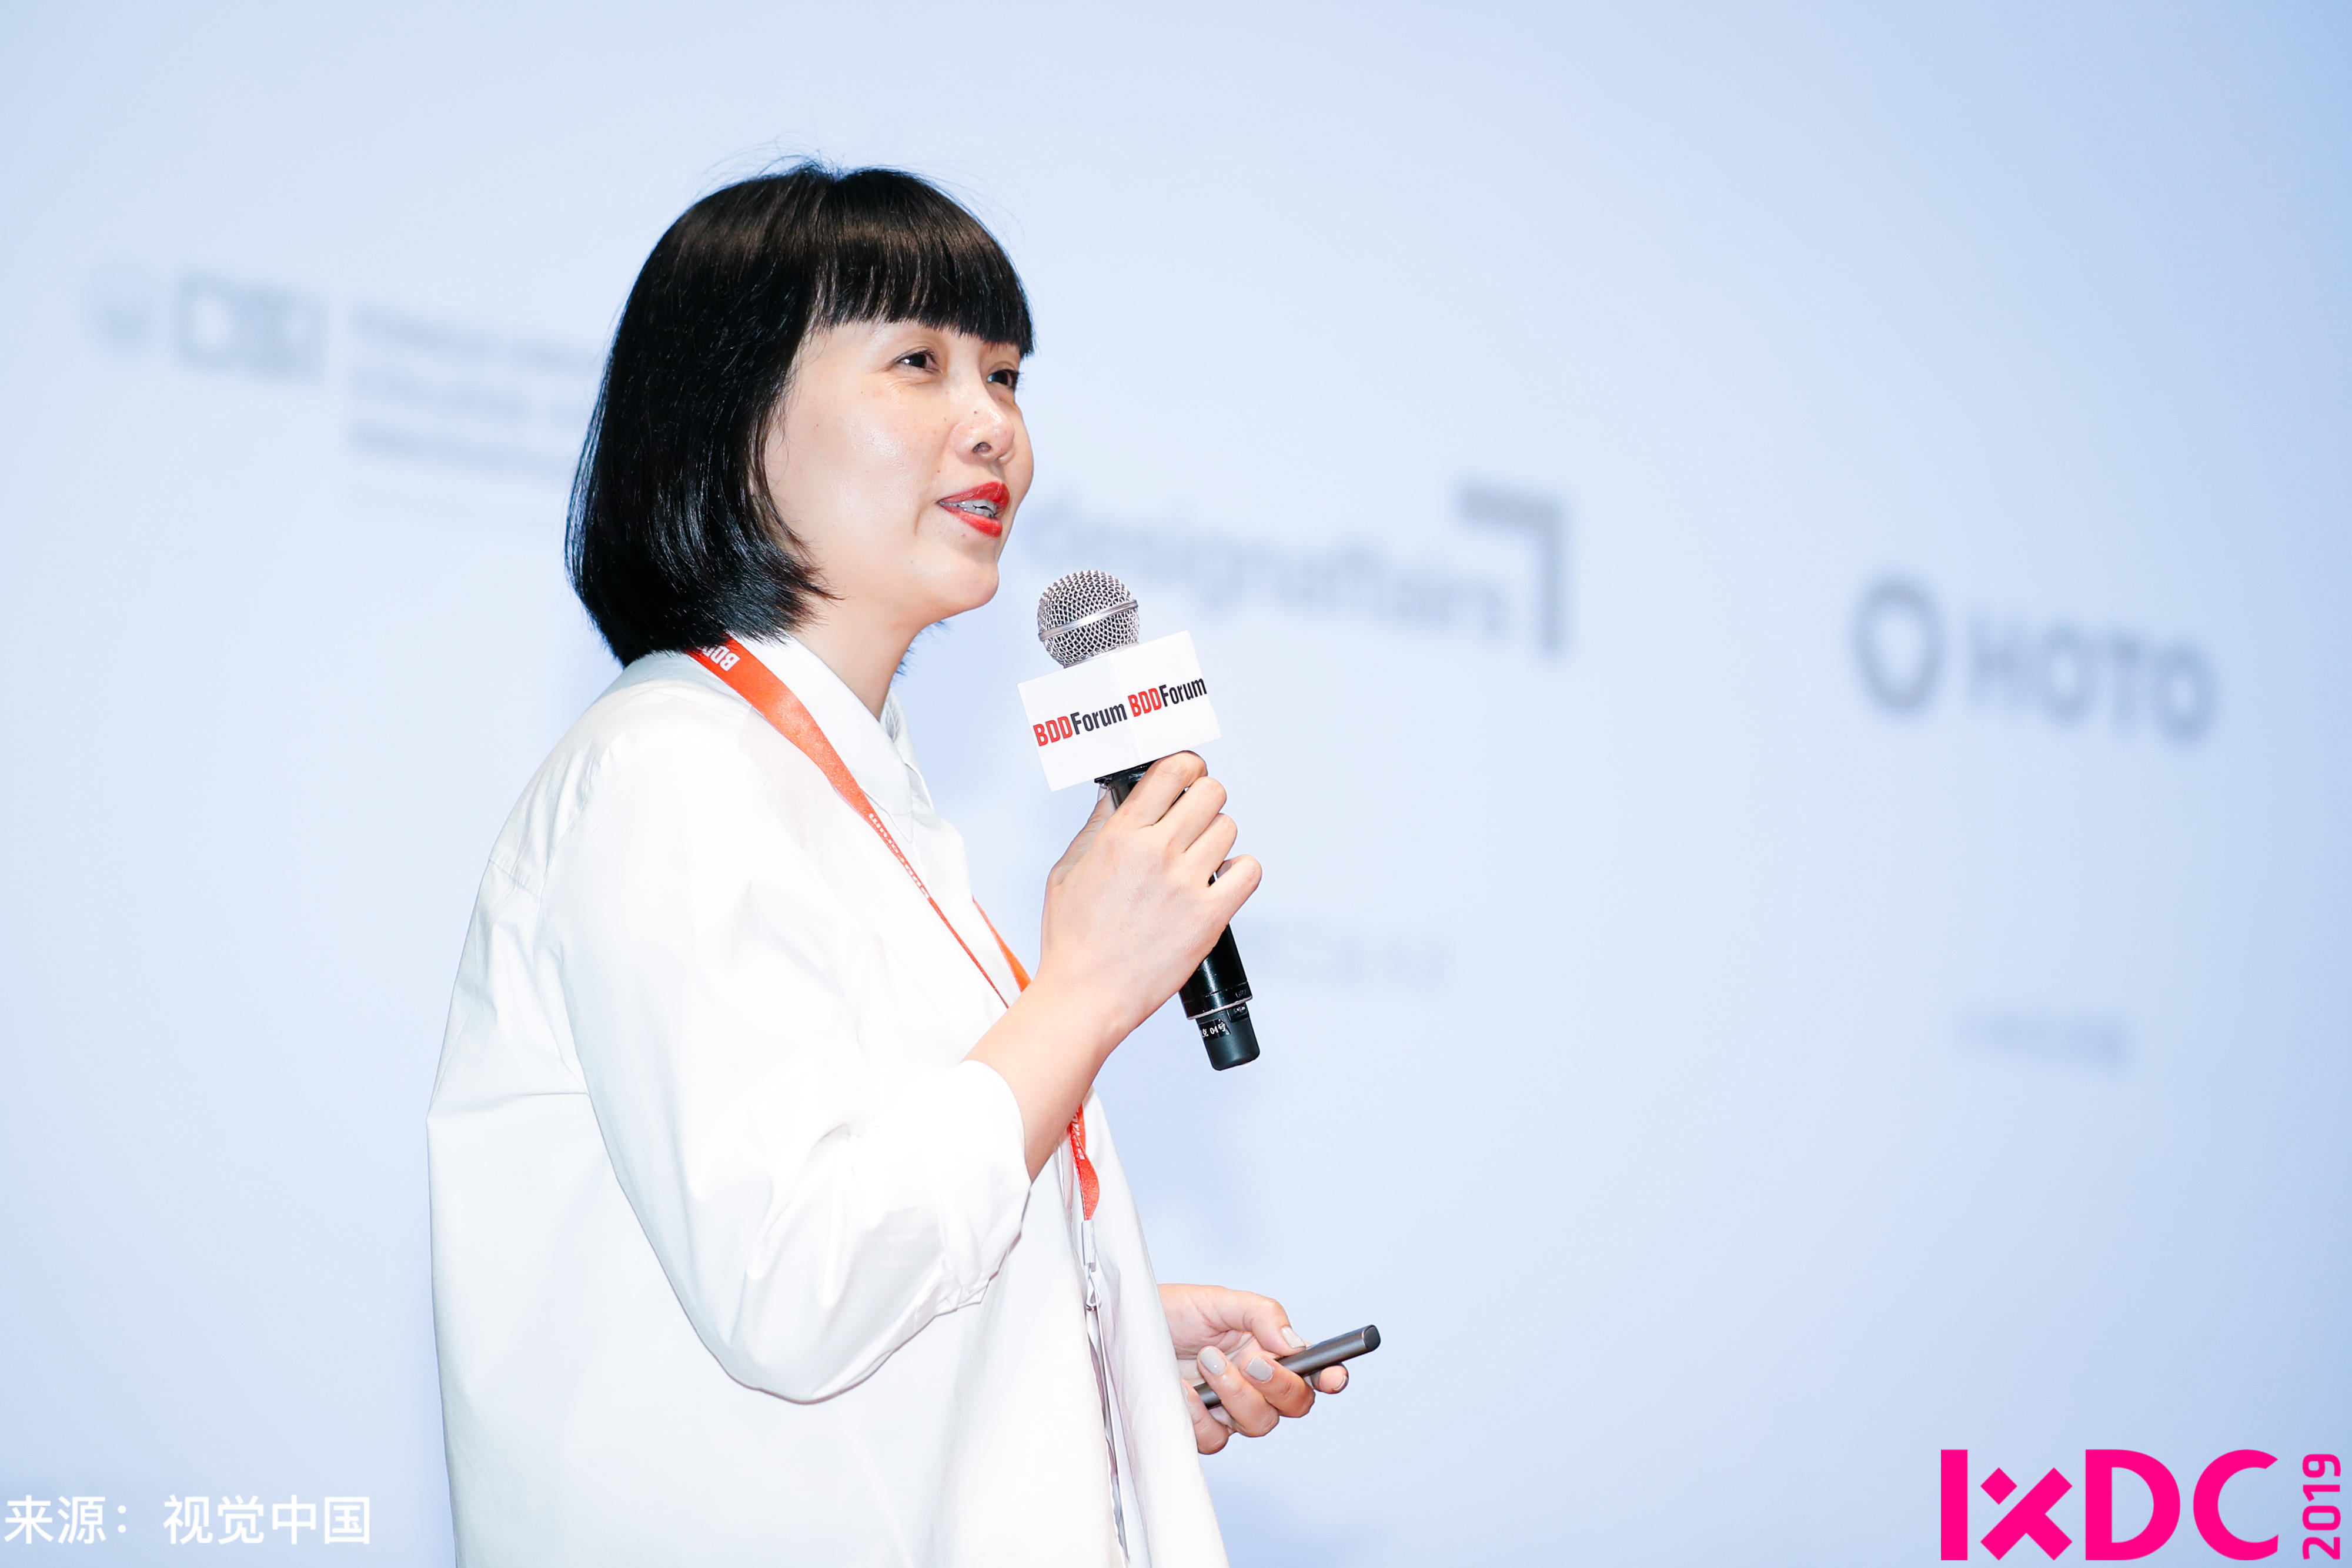 BDDForum 2019·北京：CEO 的设计思维 | 图文直播